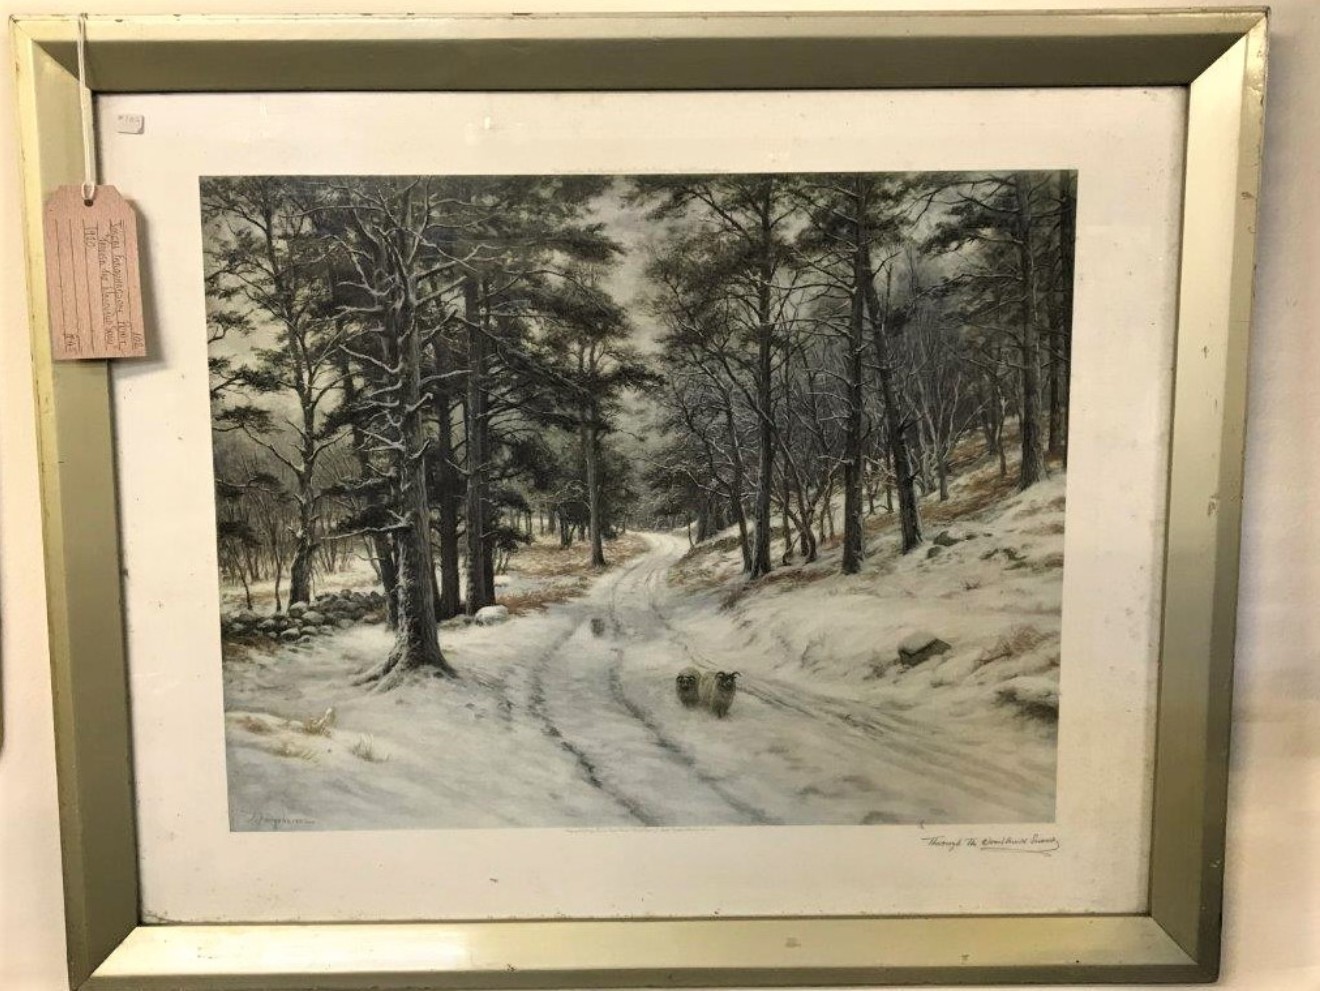 Joseph Farquharson Print “Through the Woodland Snow”